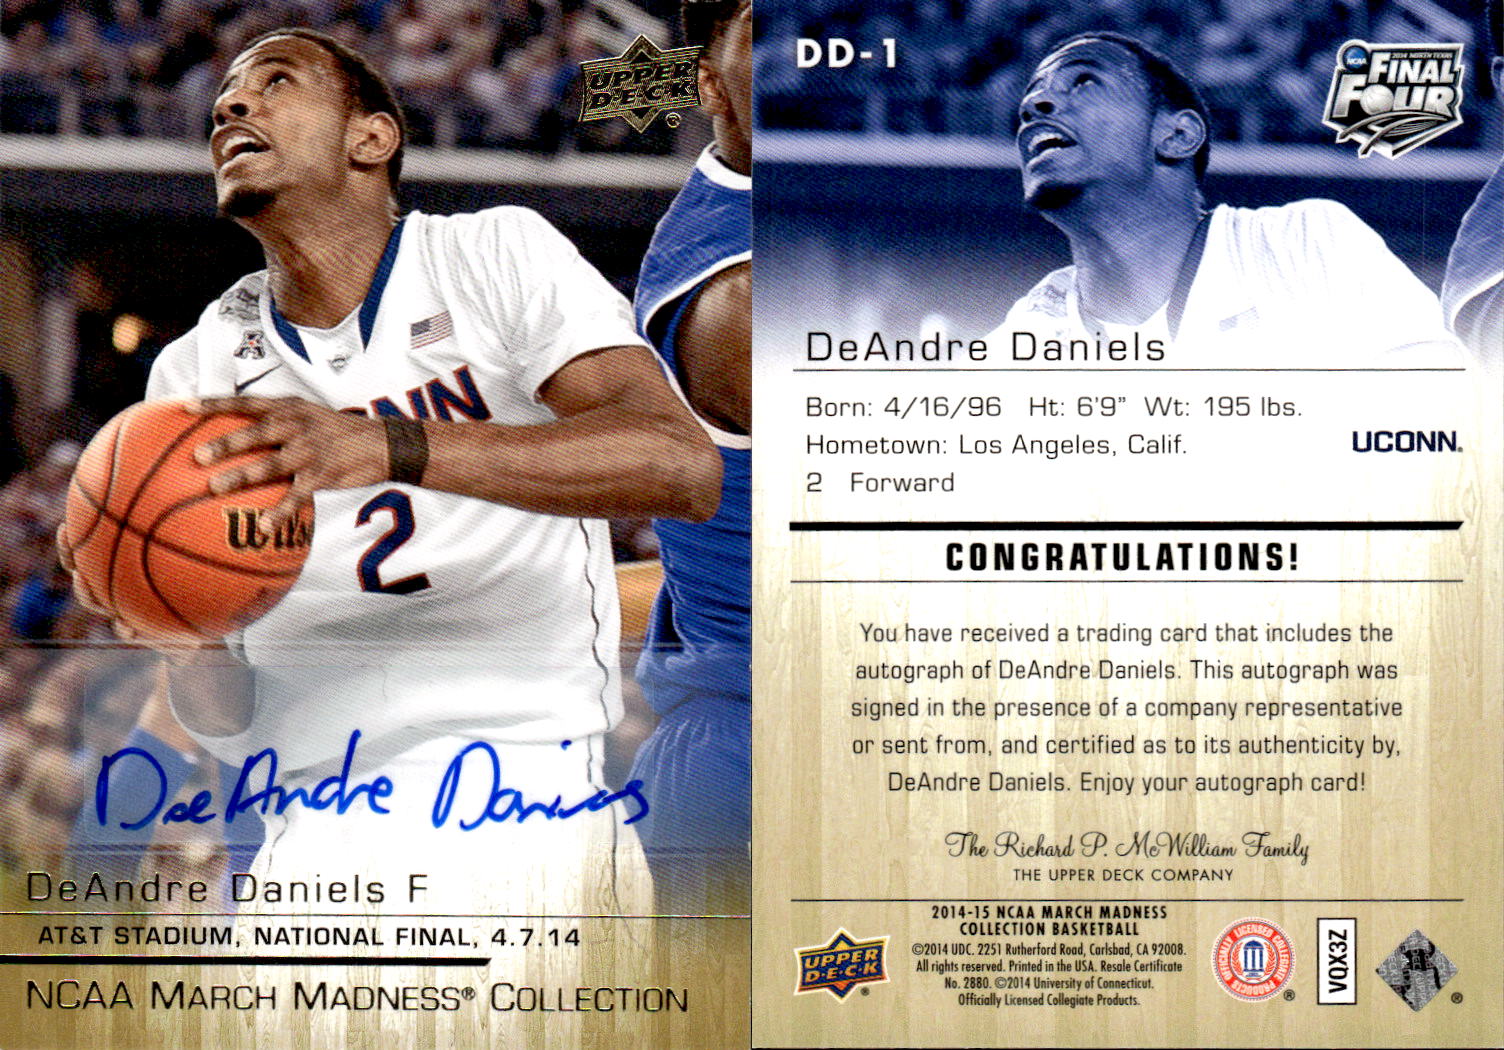 2014-15 Upper Deck March Madness Collection Gold Foil Autographs #DD1 DeAndre Daniels G